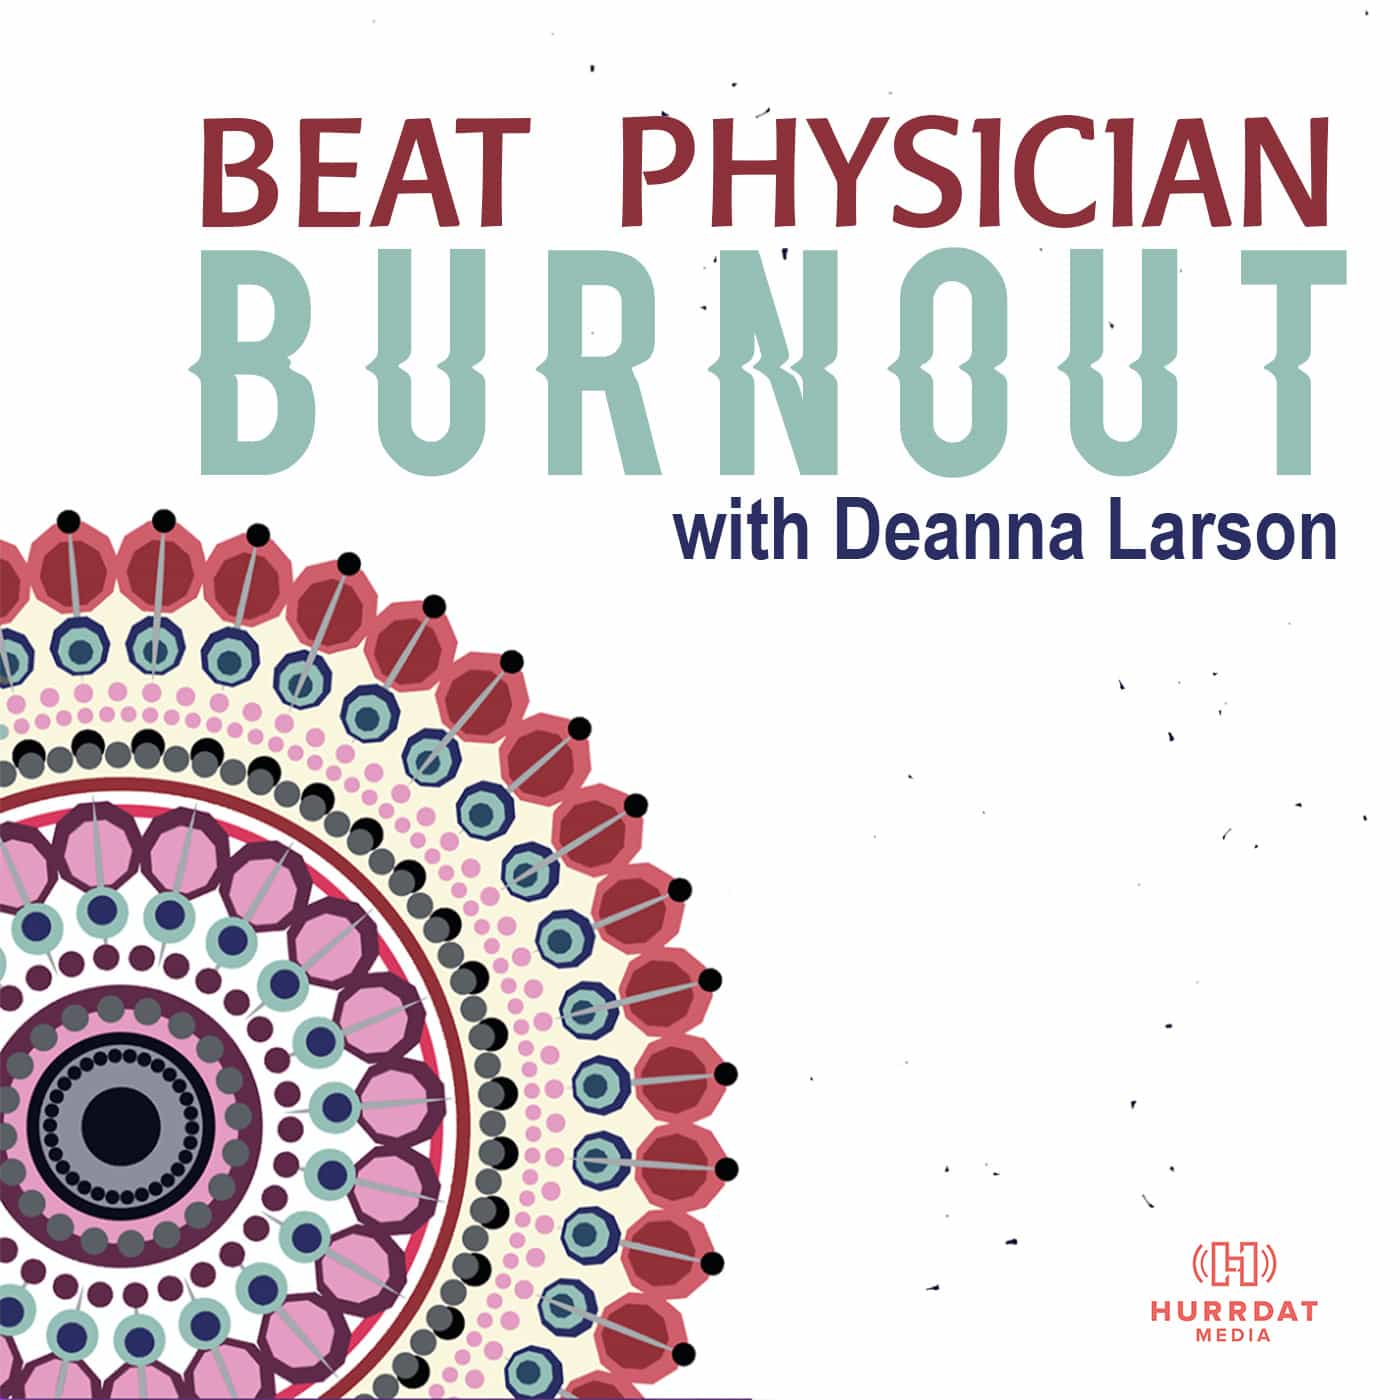 Beat Physician Burnout